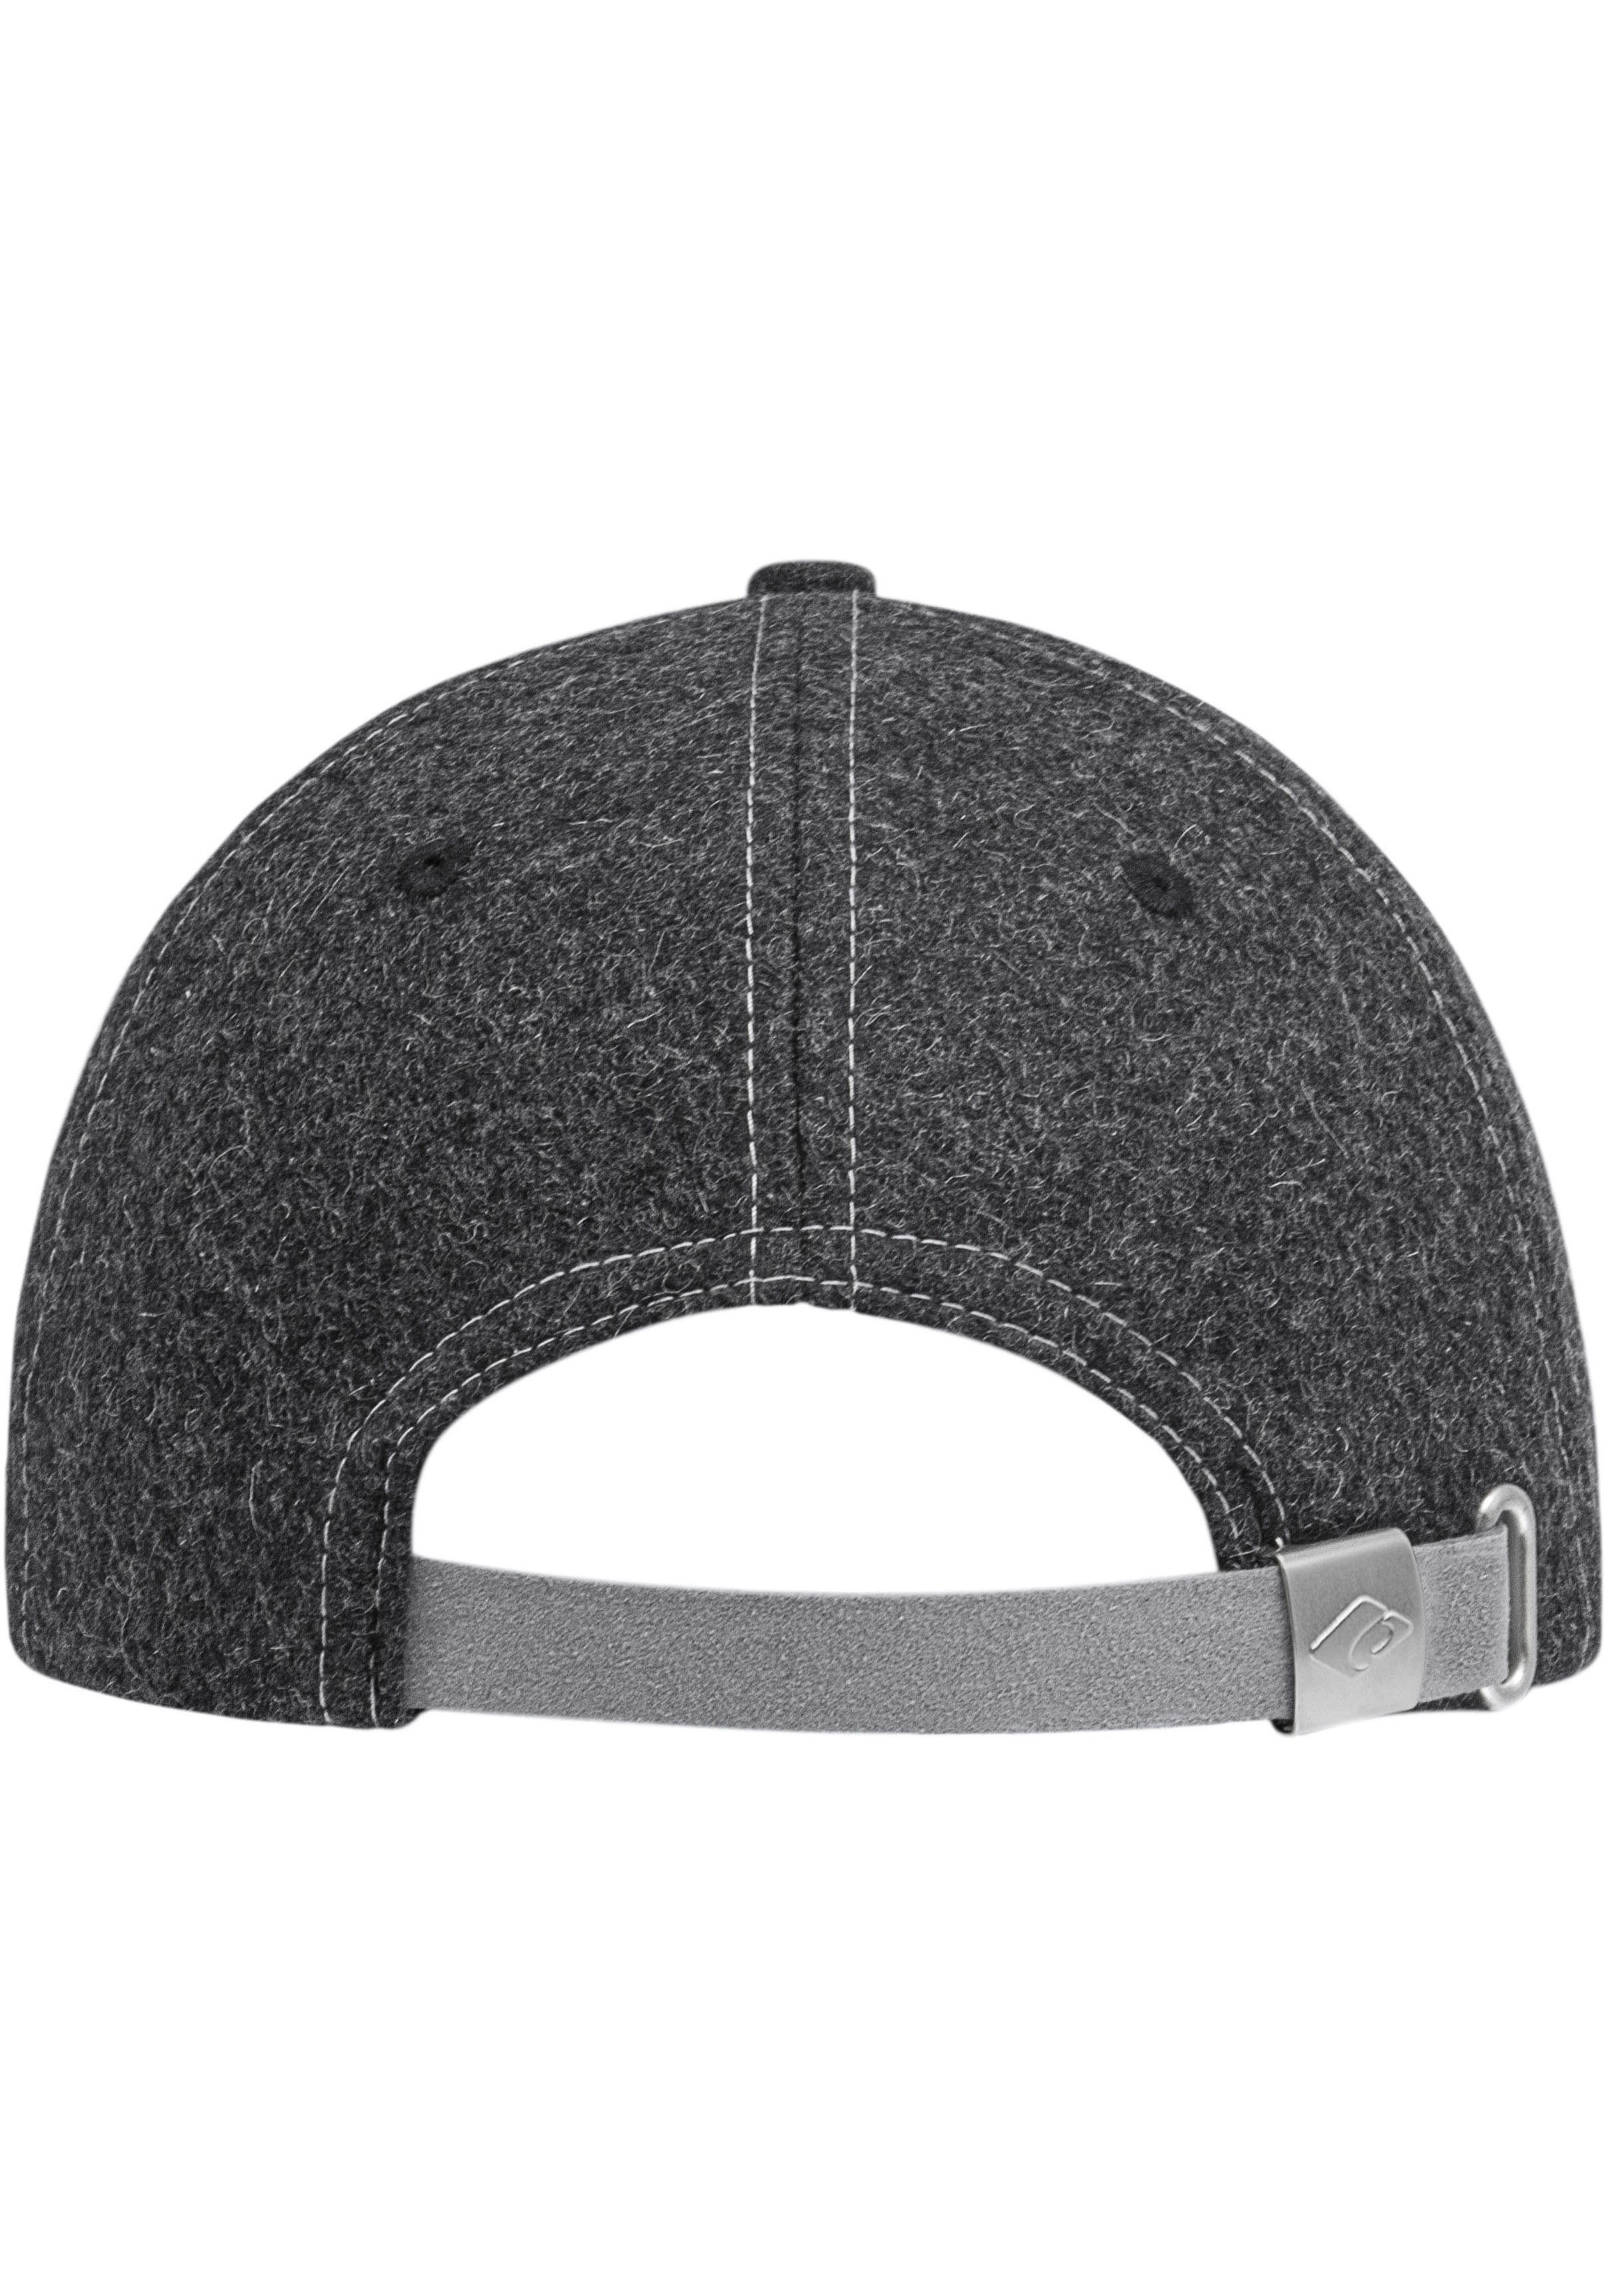 Baseball Hat chillouts Material grey Mateo Wasserabweisendes dark Cap